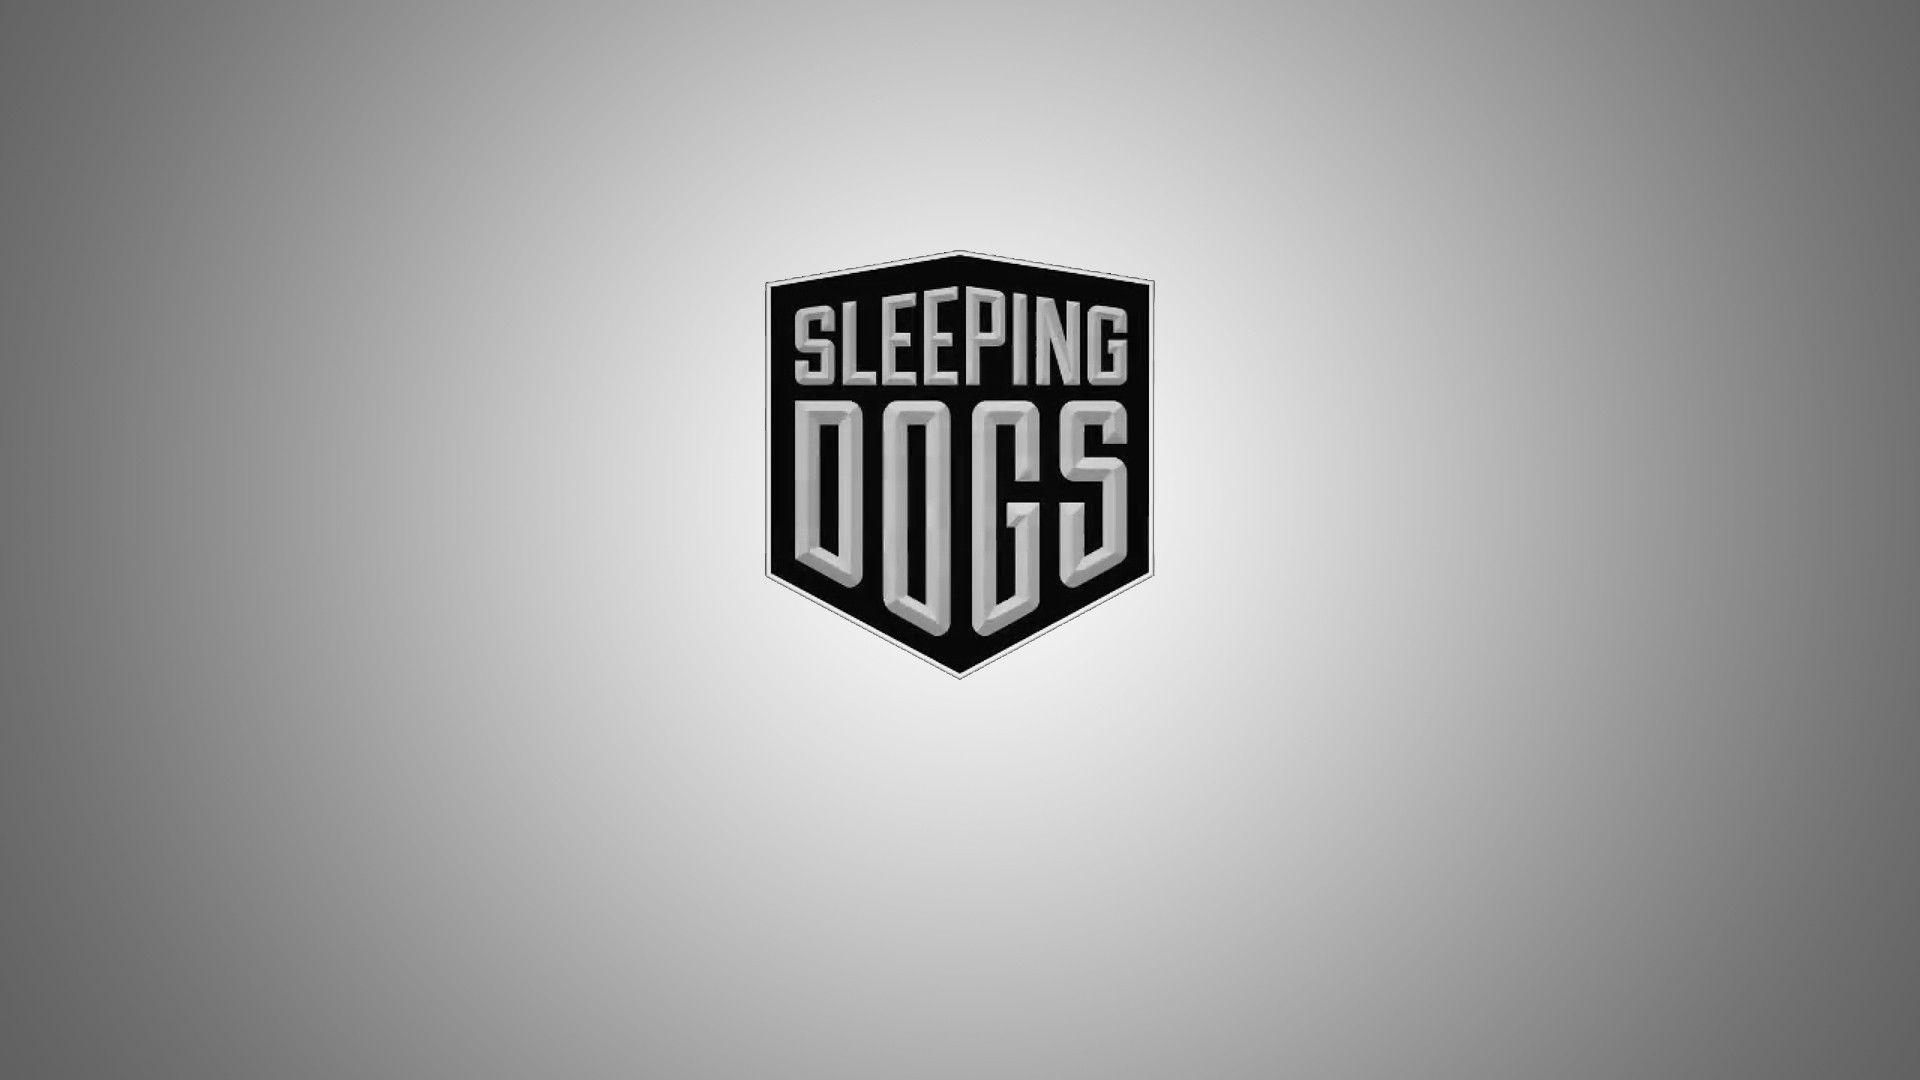 Sleeping dogs wallpaper. PC